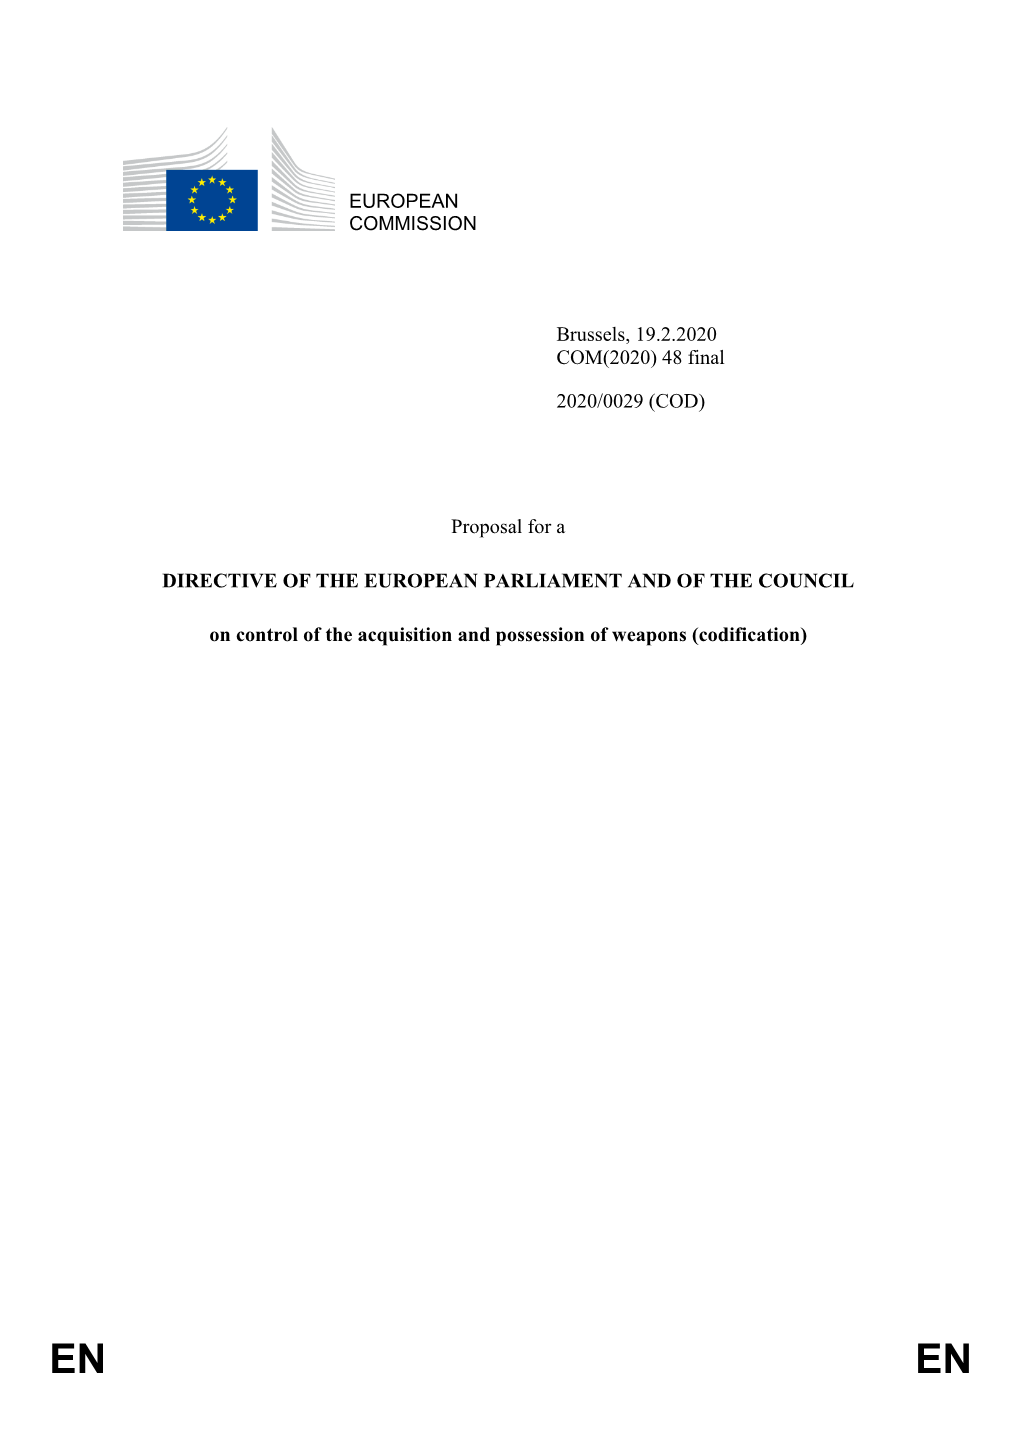 EUROPEAN COMMISSION Brussels, 19.2.2020 COM(2020